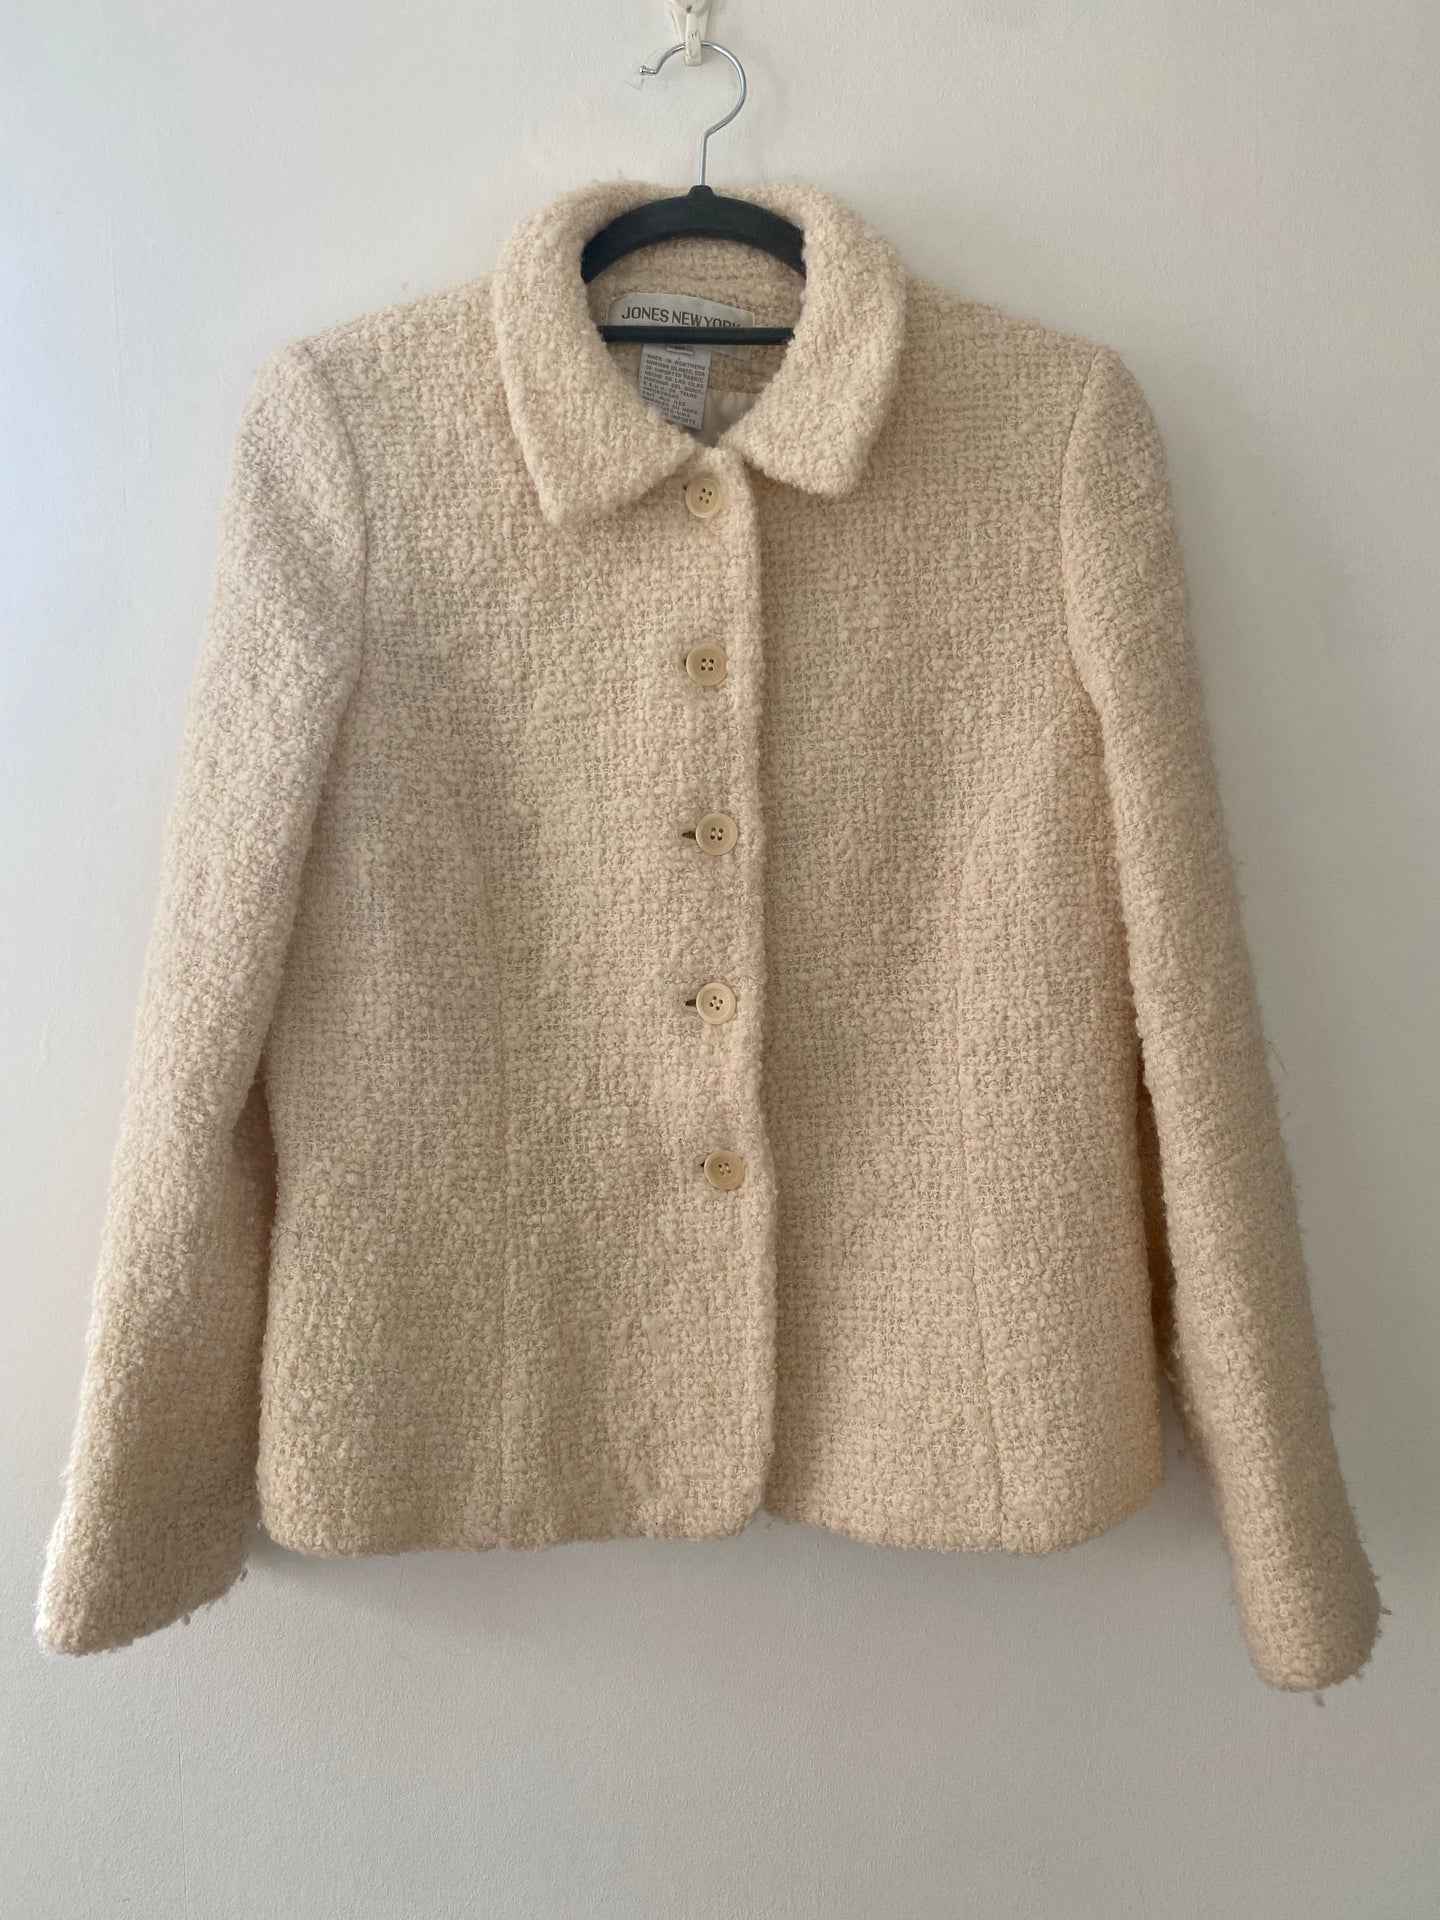 Jones New York wool boucle collared jacket